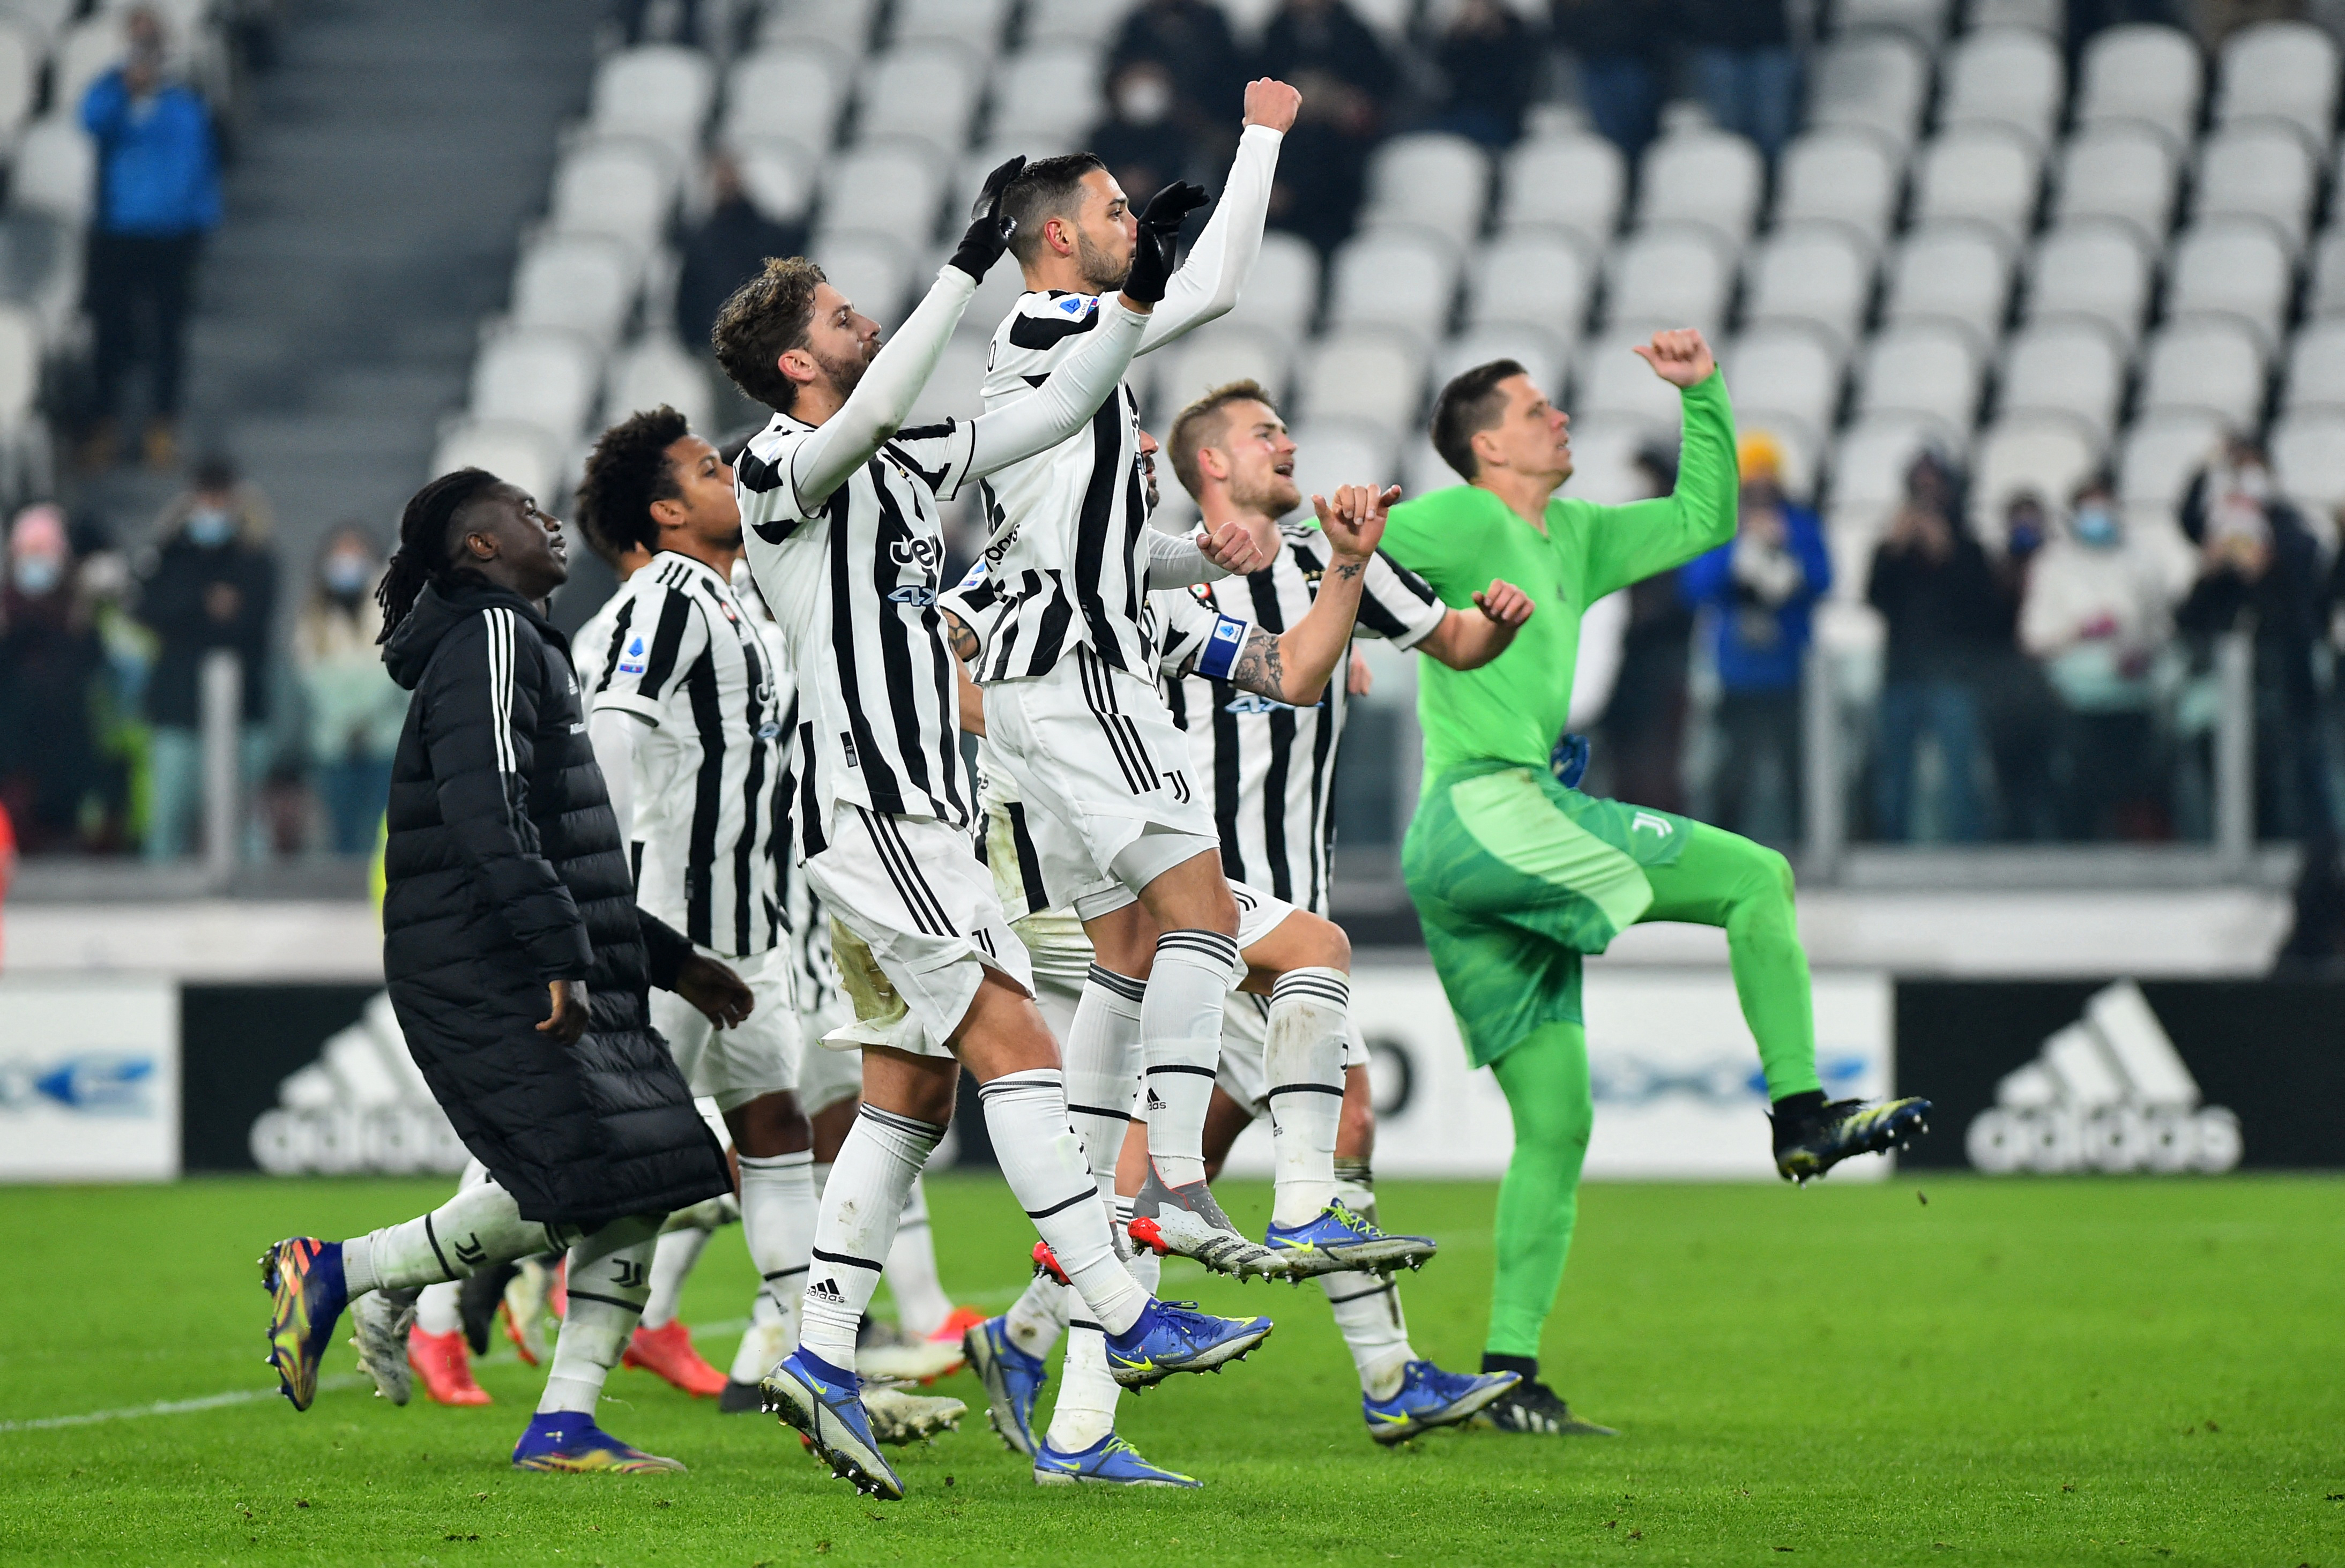 Bernardeschi finally scores as Juventus cruise past Cagliari - Reuters